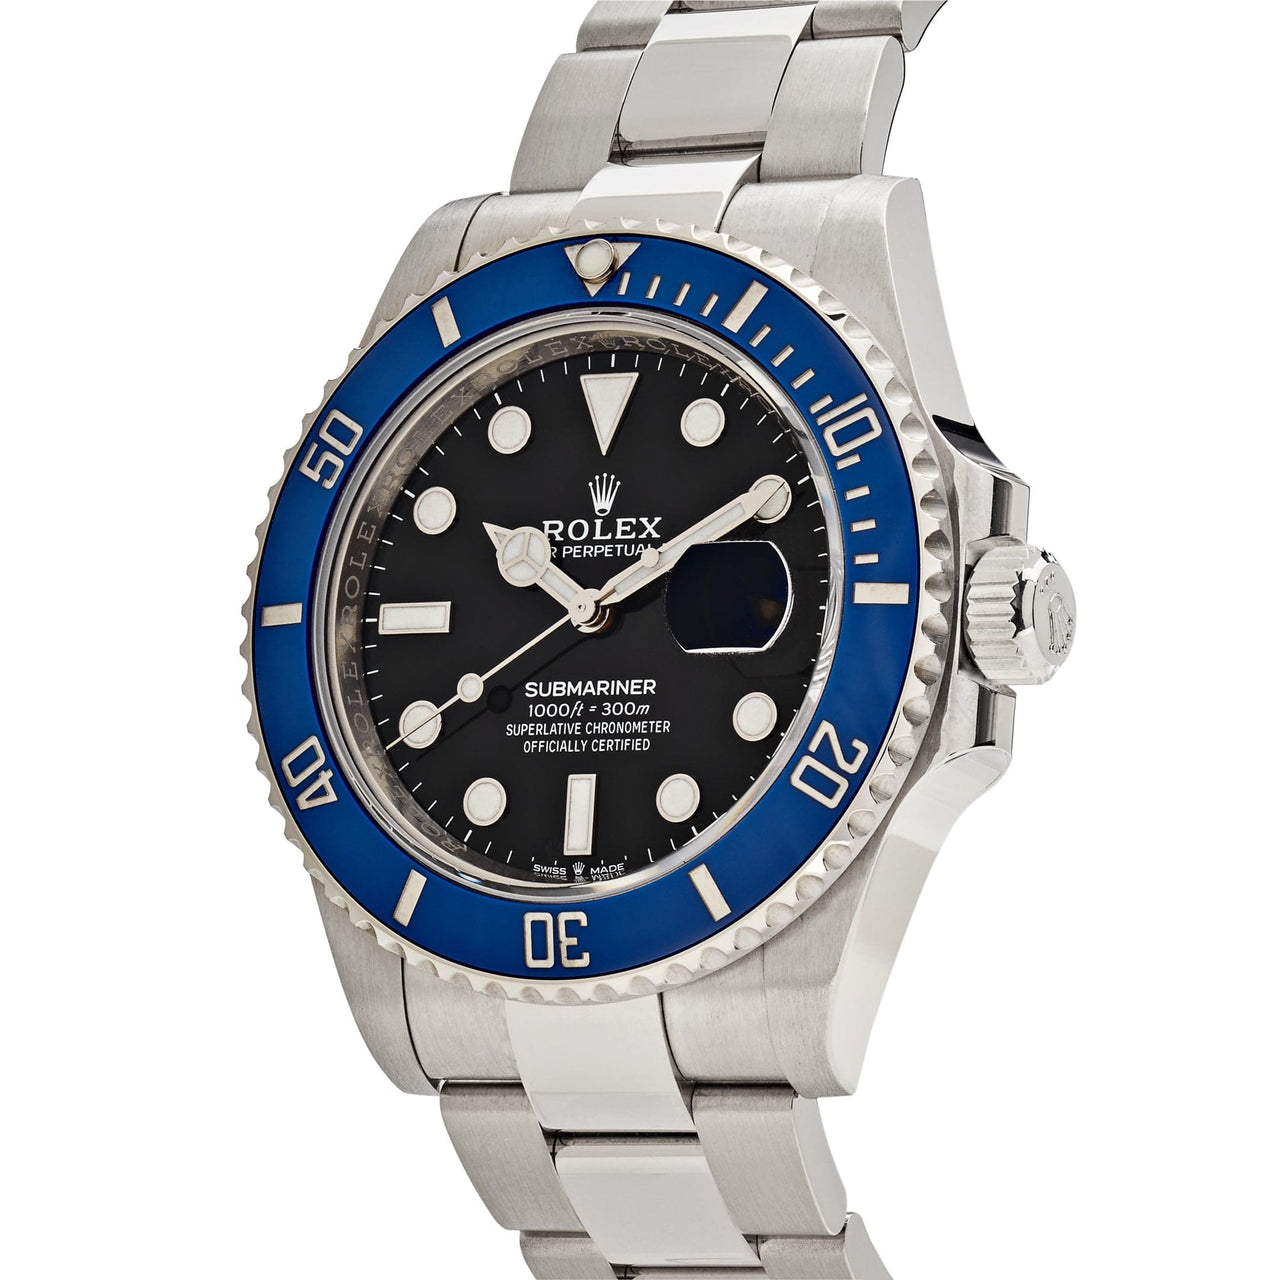 Rolex Submariner Date 41 White Gold Black Dial Blue Bezel 126619LB (2023) wrist aficionado